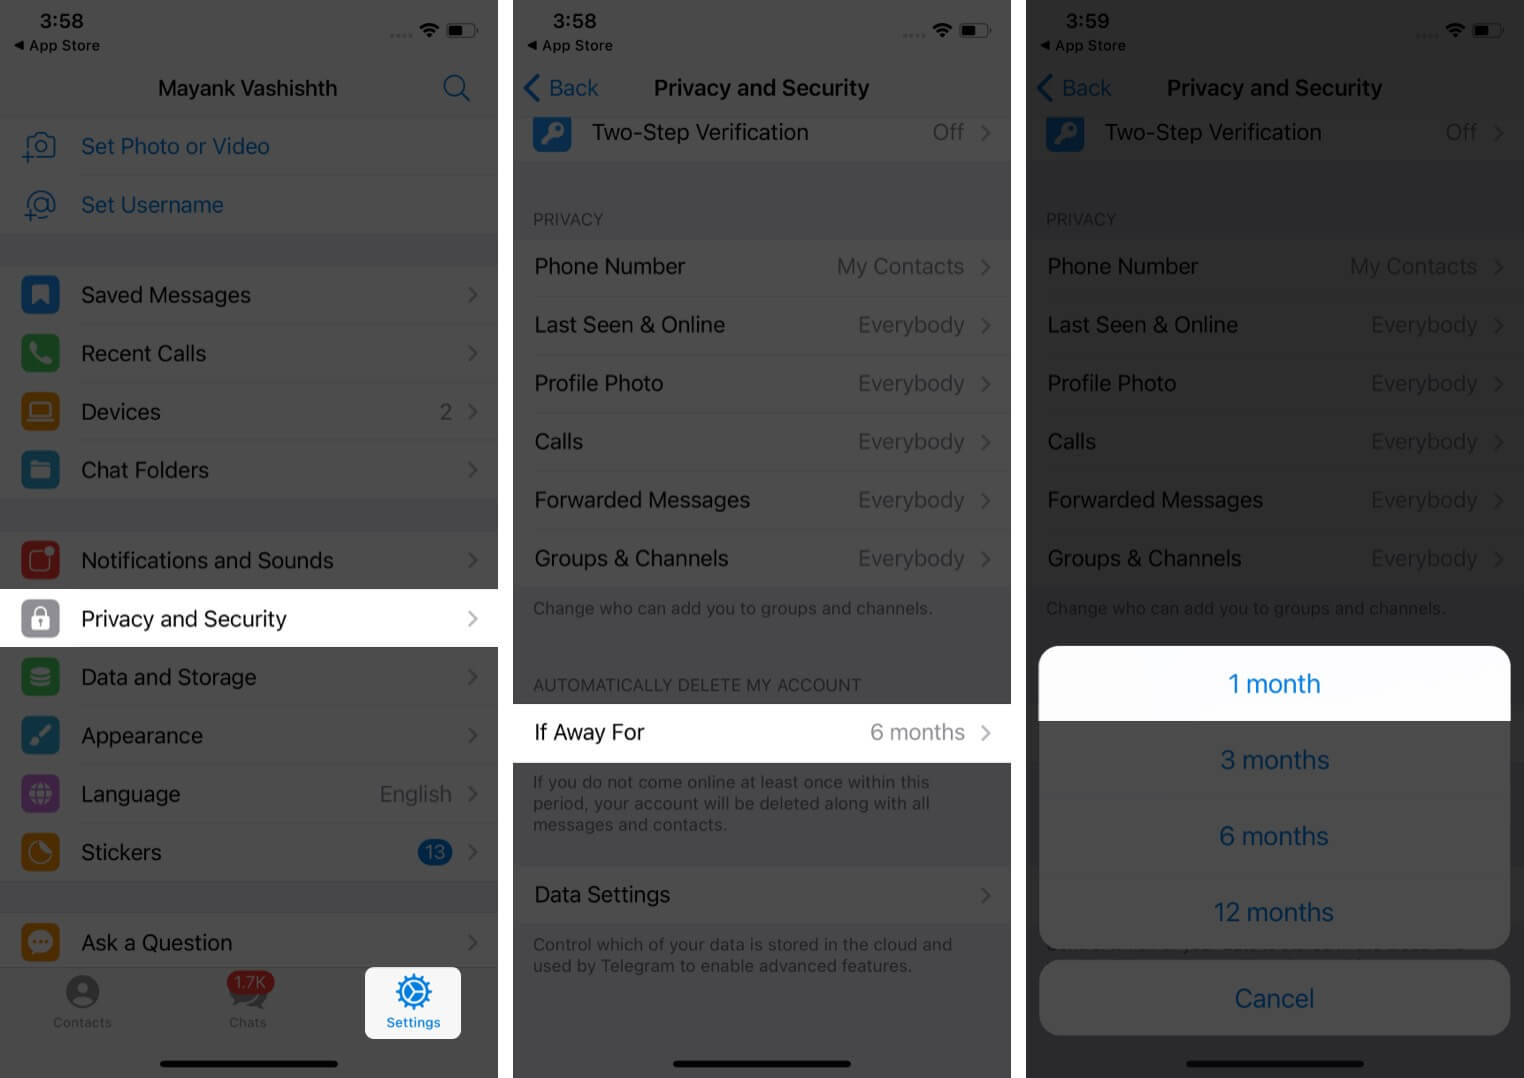 Delete telegram account by adjusting self-destruction settings on iPhone